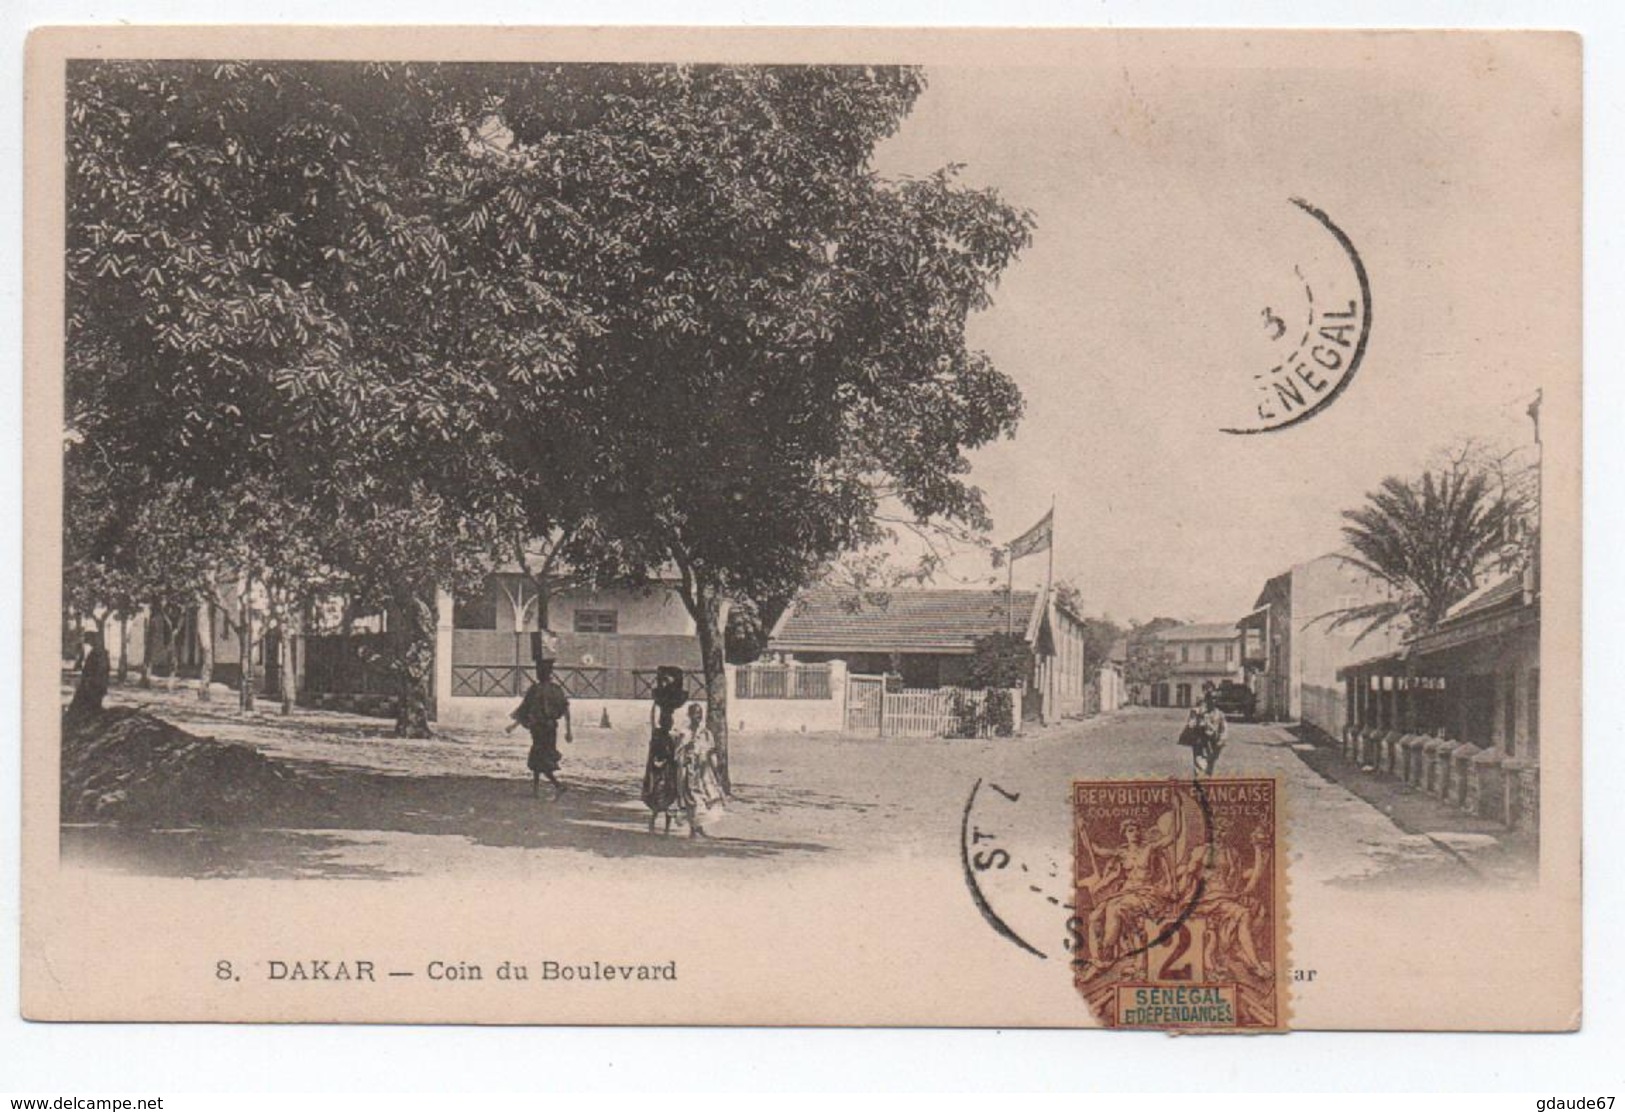 DAKAR (SENEGAL) - COIN DU BOULEVARD - Sénégal